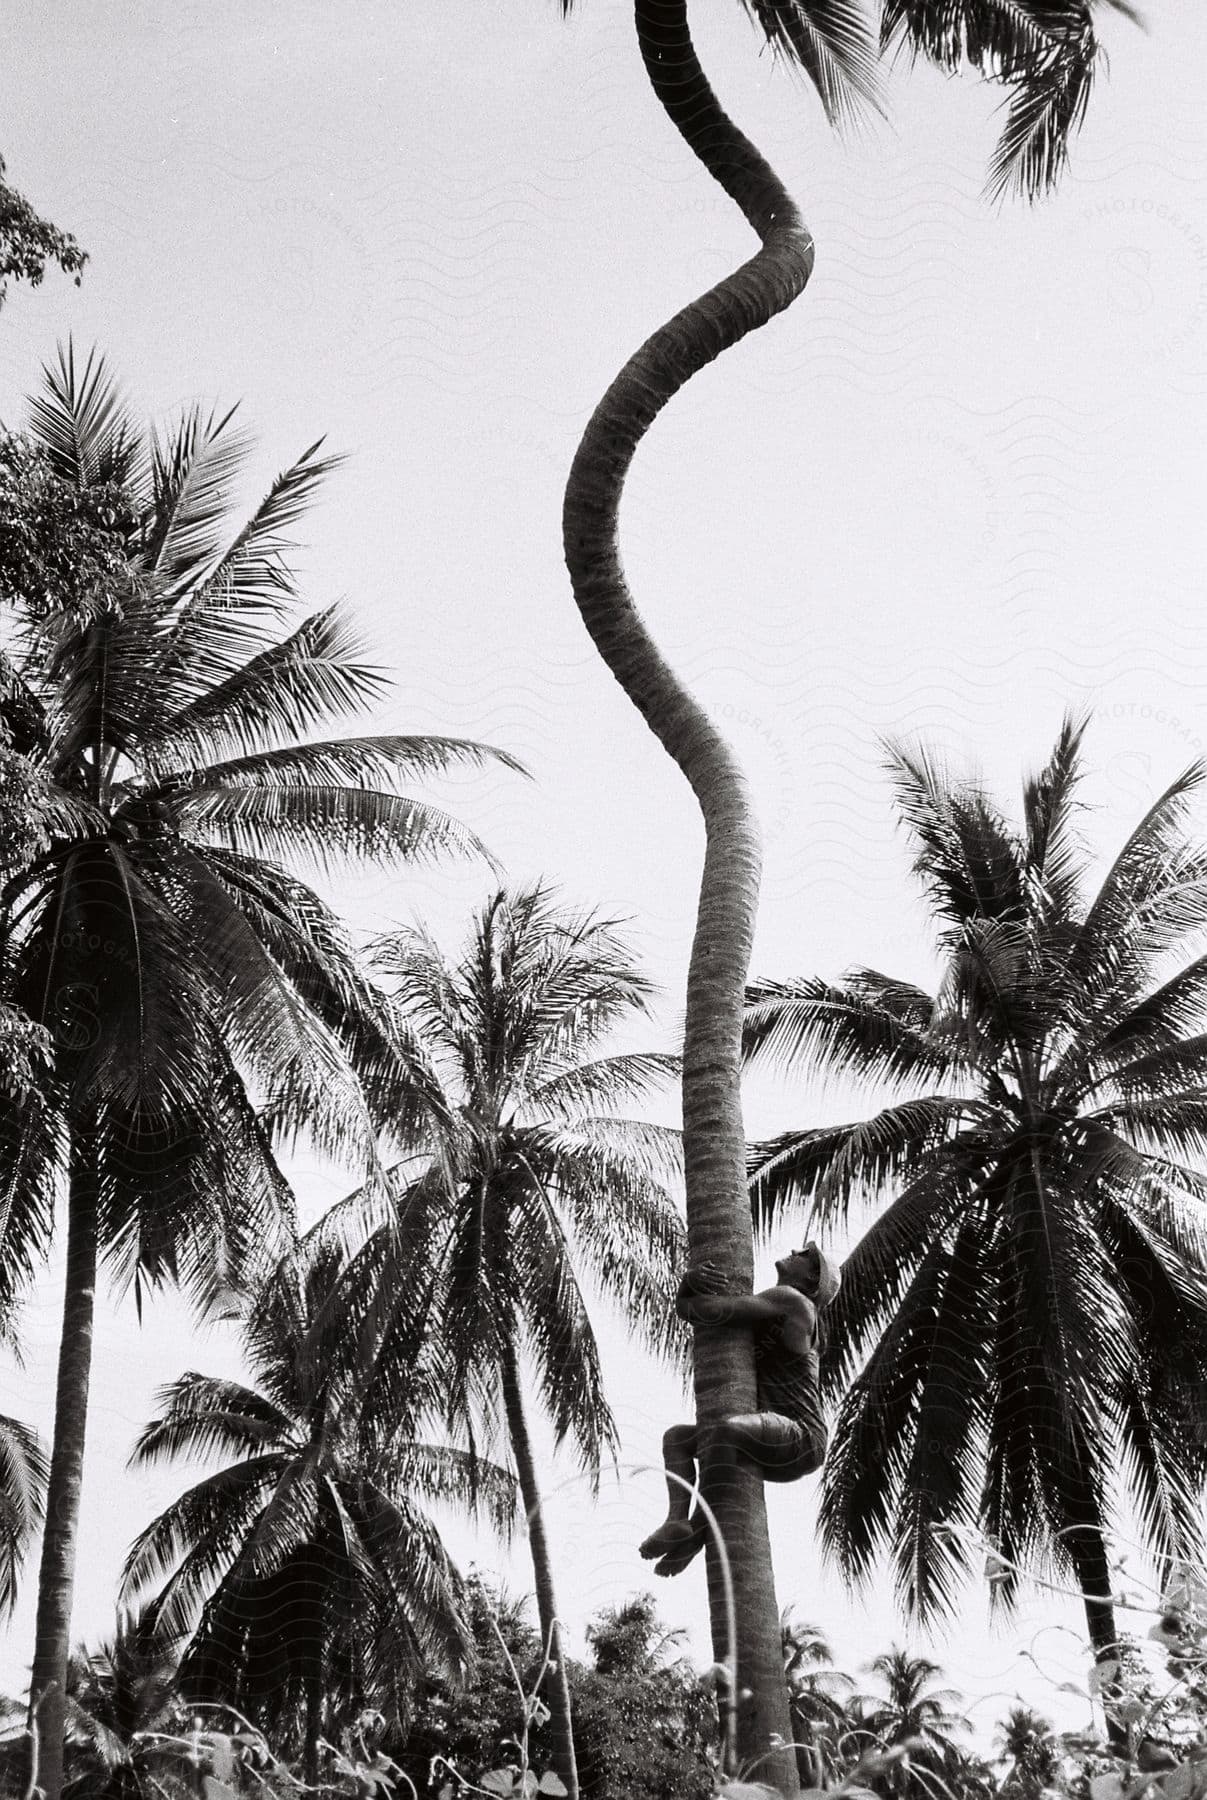 A man climbs a palm tree trunk outdoors